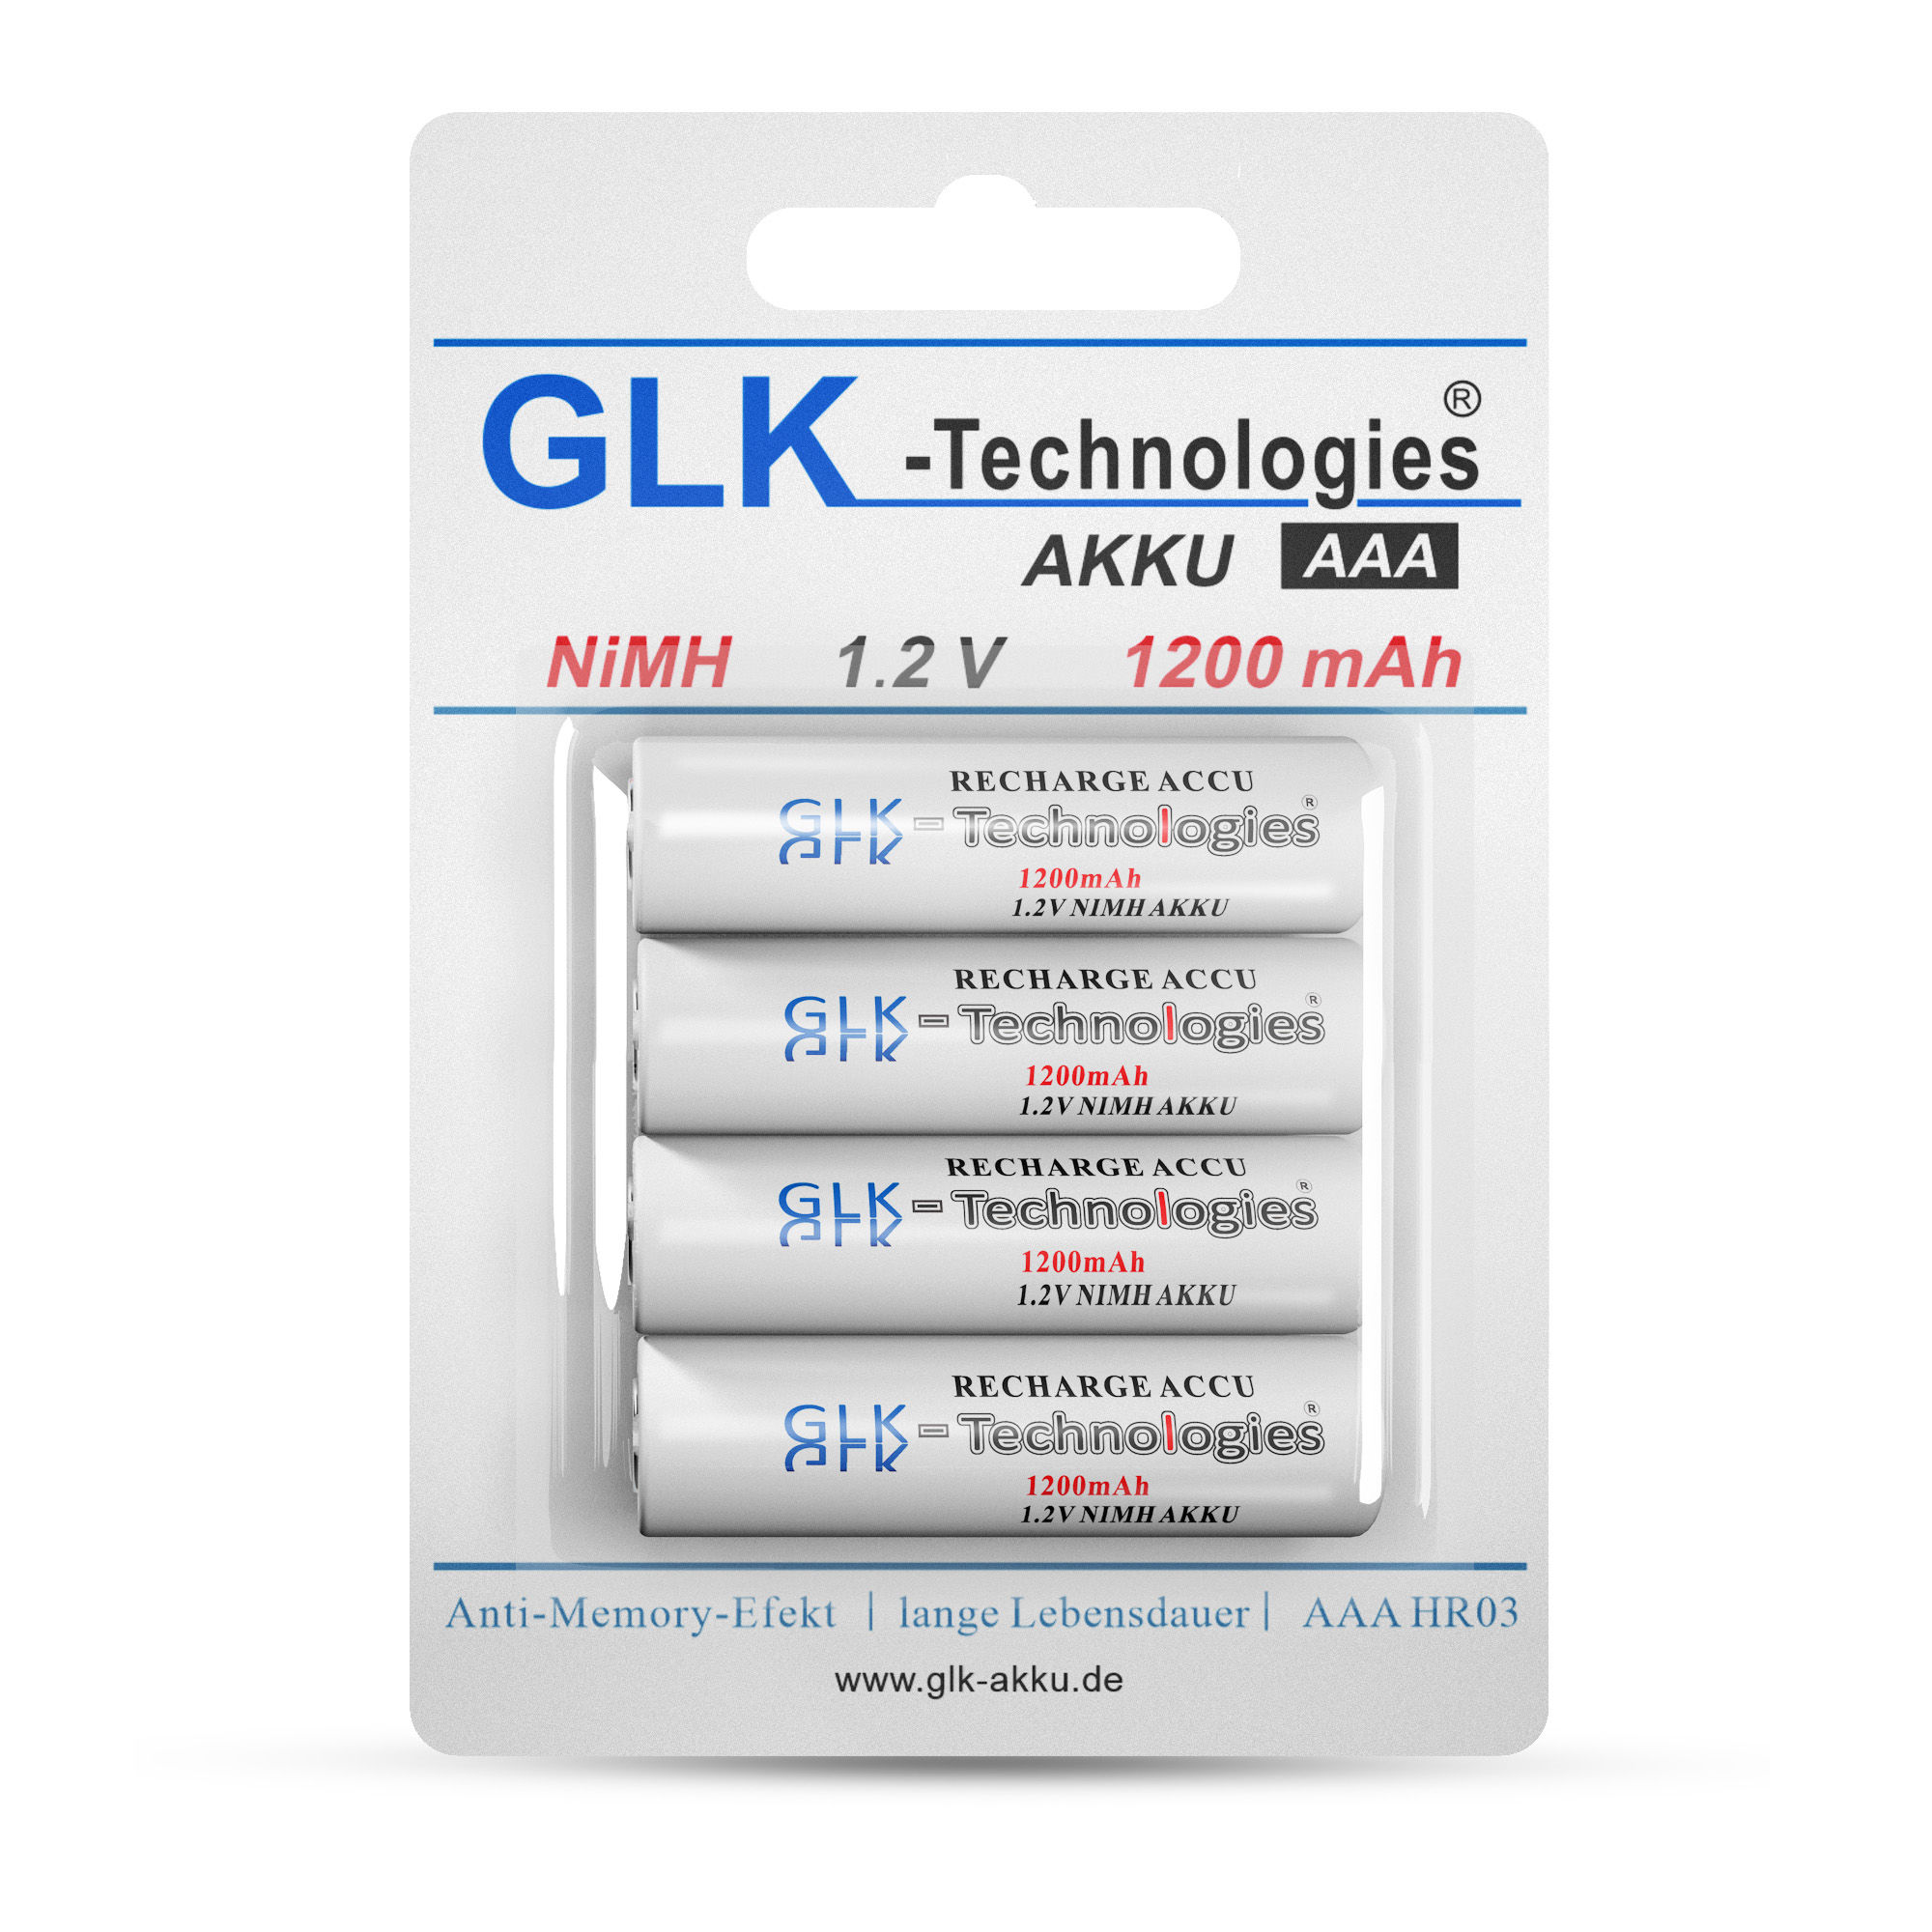 GLK-TECHNOLOGIES AAA HR03 1200mAh Ni-MH, AAA Akku, wiederaufladbar Ni-MH